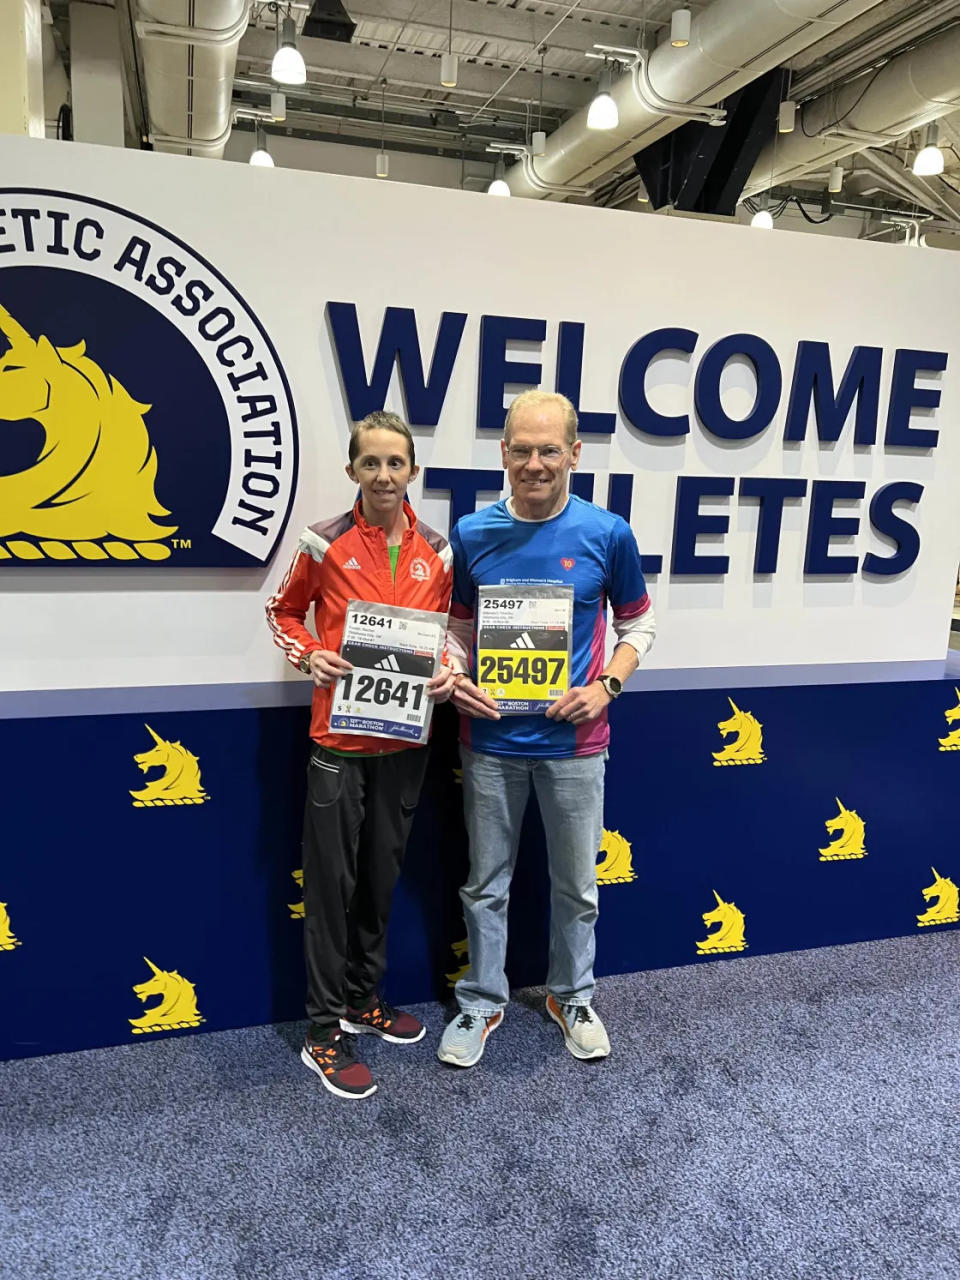 Rachel and her longtime running partner Tim Altendorf were all smiles ahead of the Boston Marathon on April 17. (Credit: Rachel and John Foster) 
